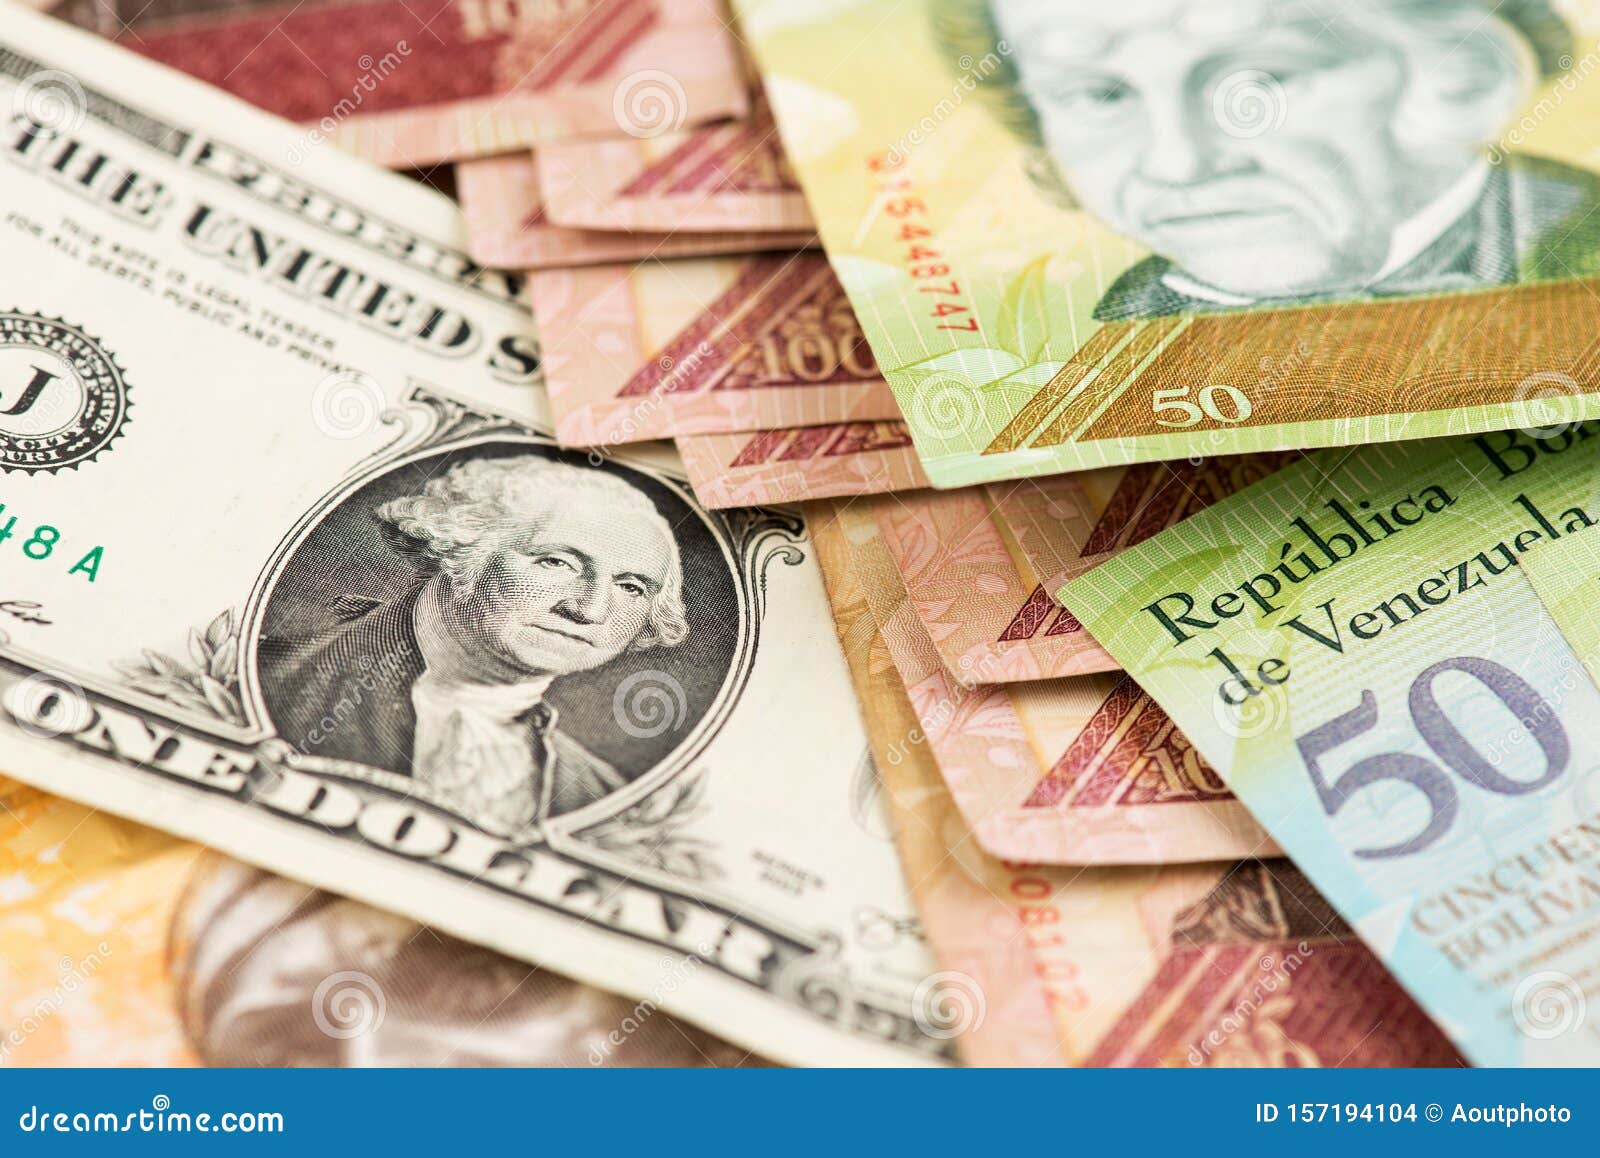 One Dollar Bill And Venezuelan Currency Bolivar Fuerte